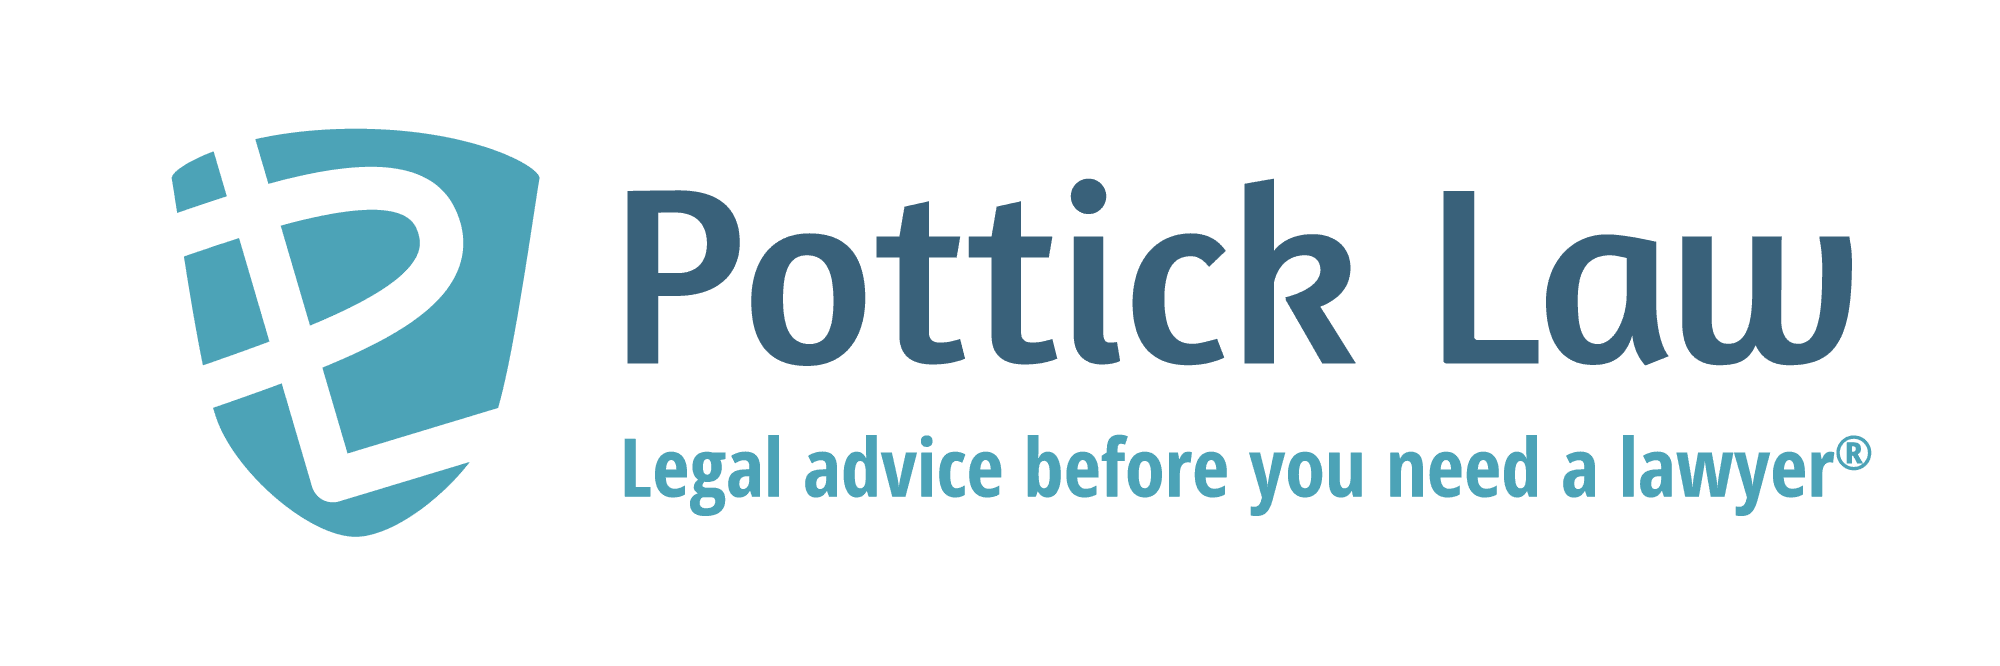 Pottick Law